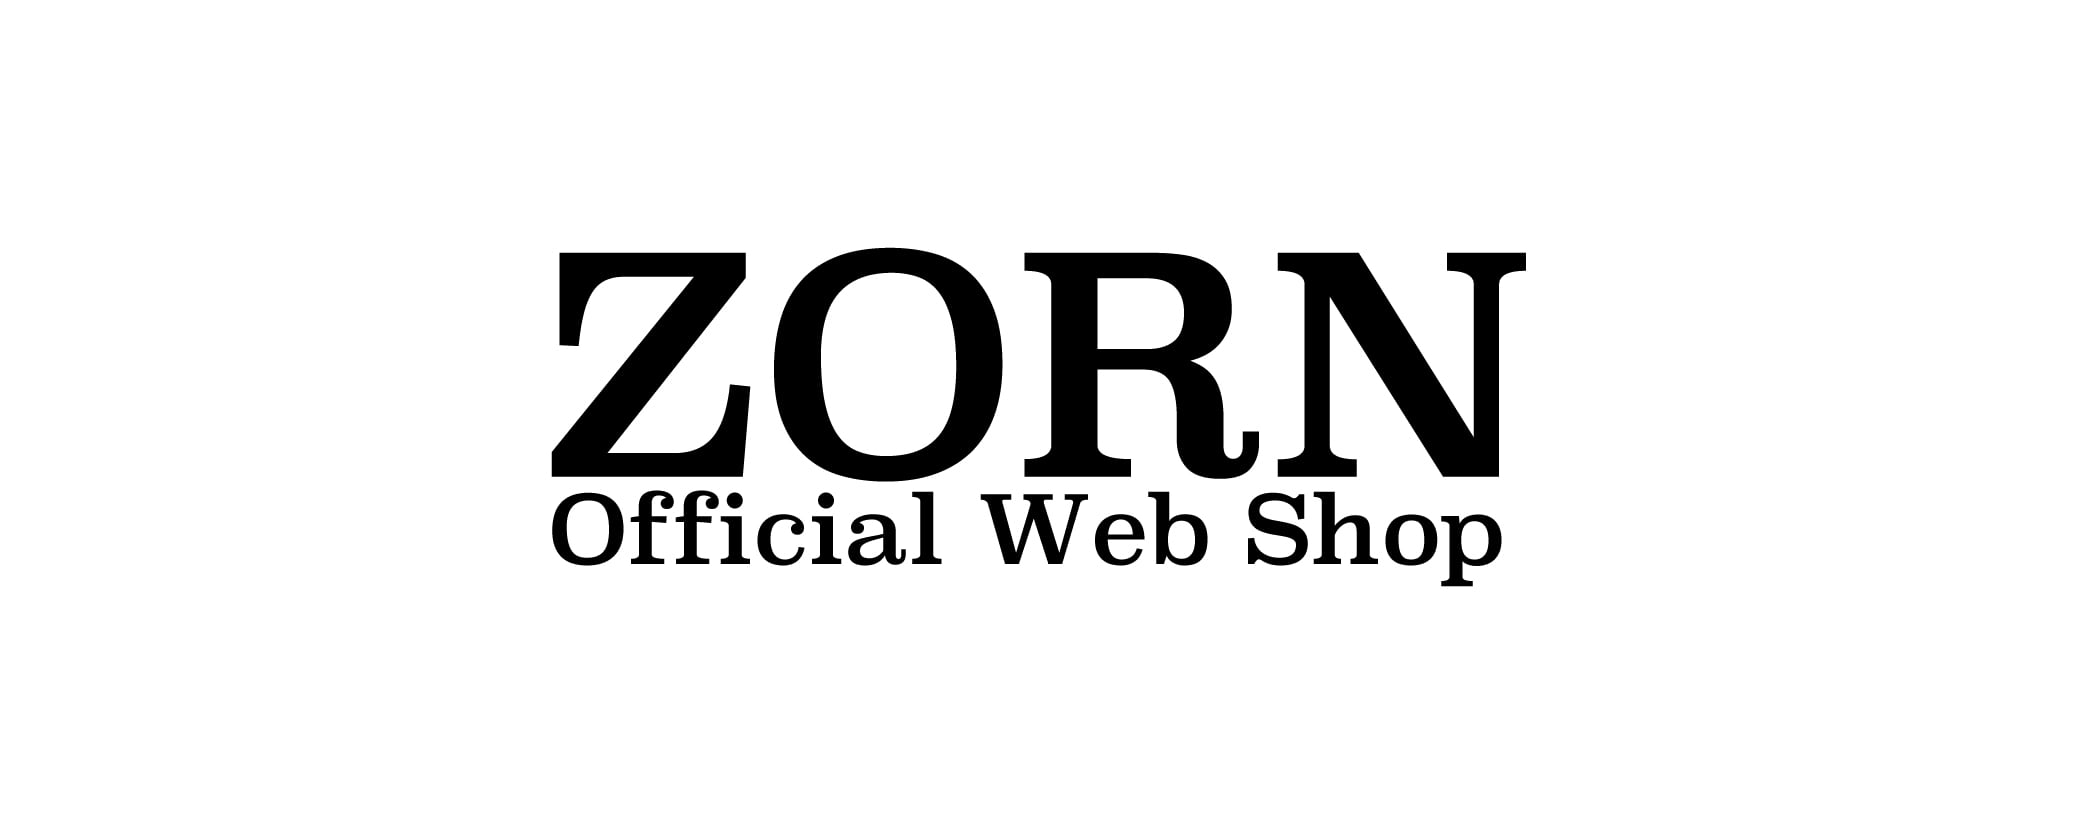 All My Homies | ZORN Official Web Shop